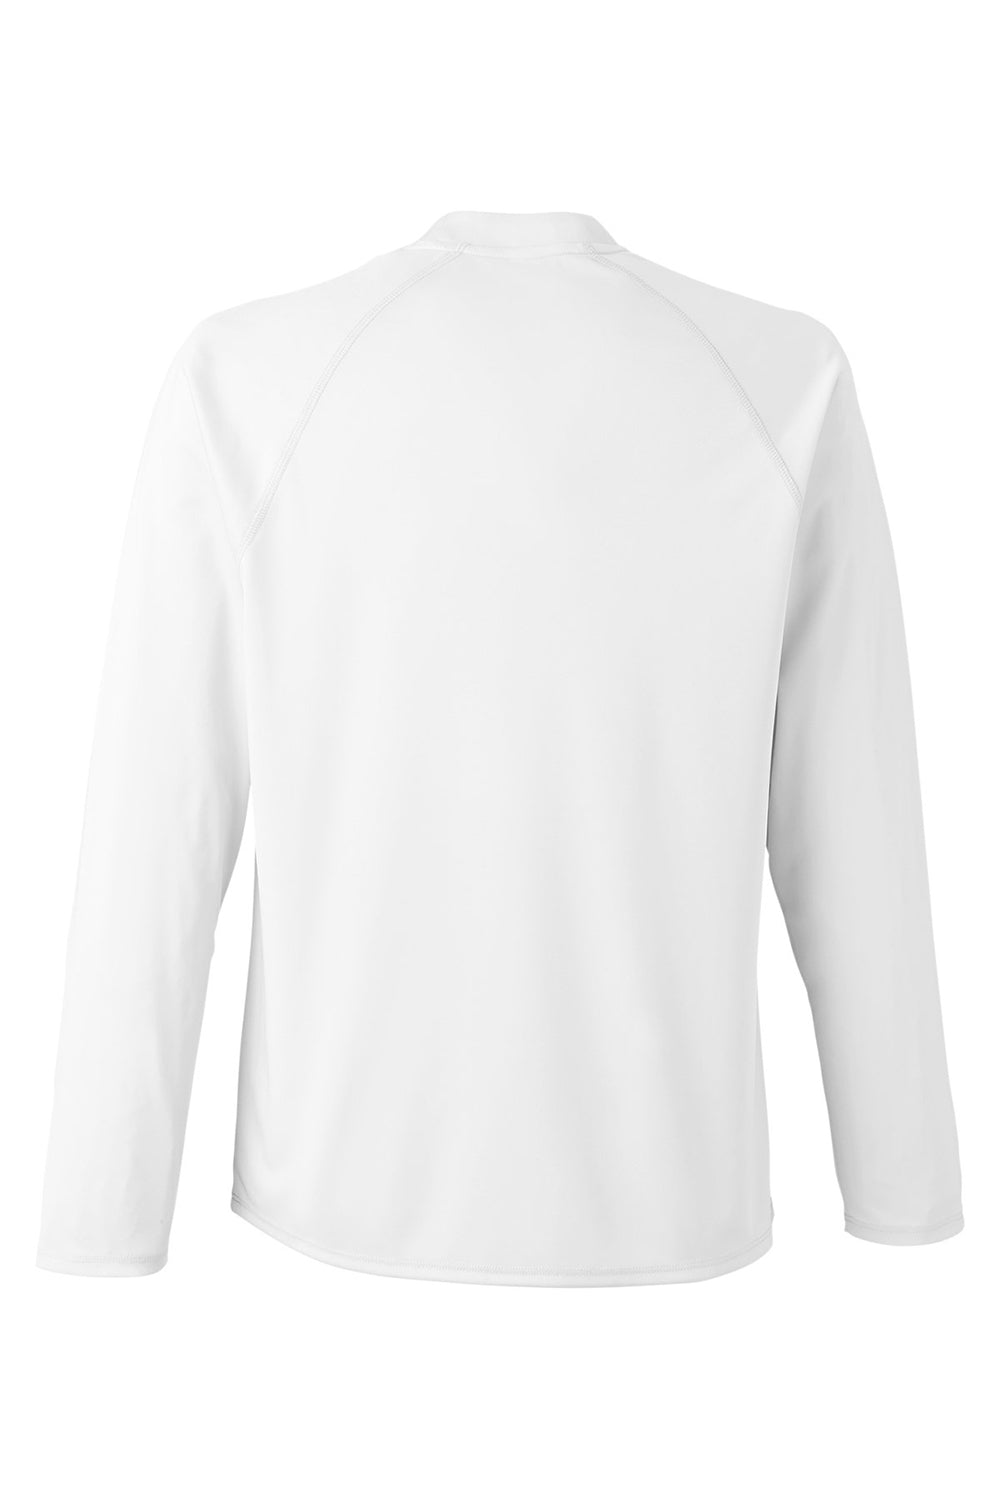 Core 365 CE110 Mens Ultra MVP Raglan Long Sleeve T-Shirt White Flat Back